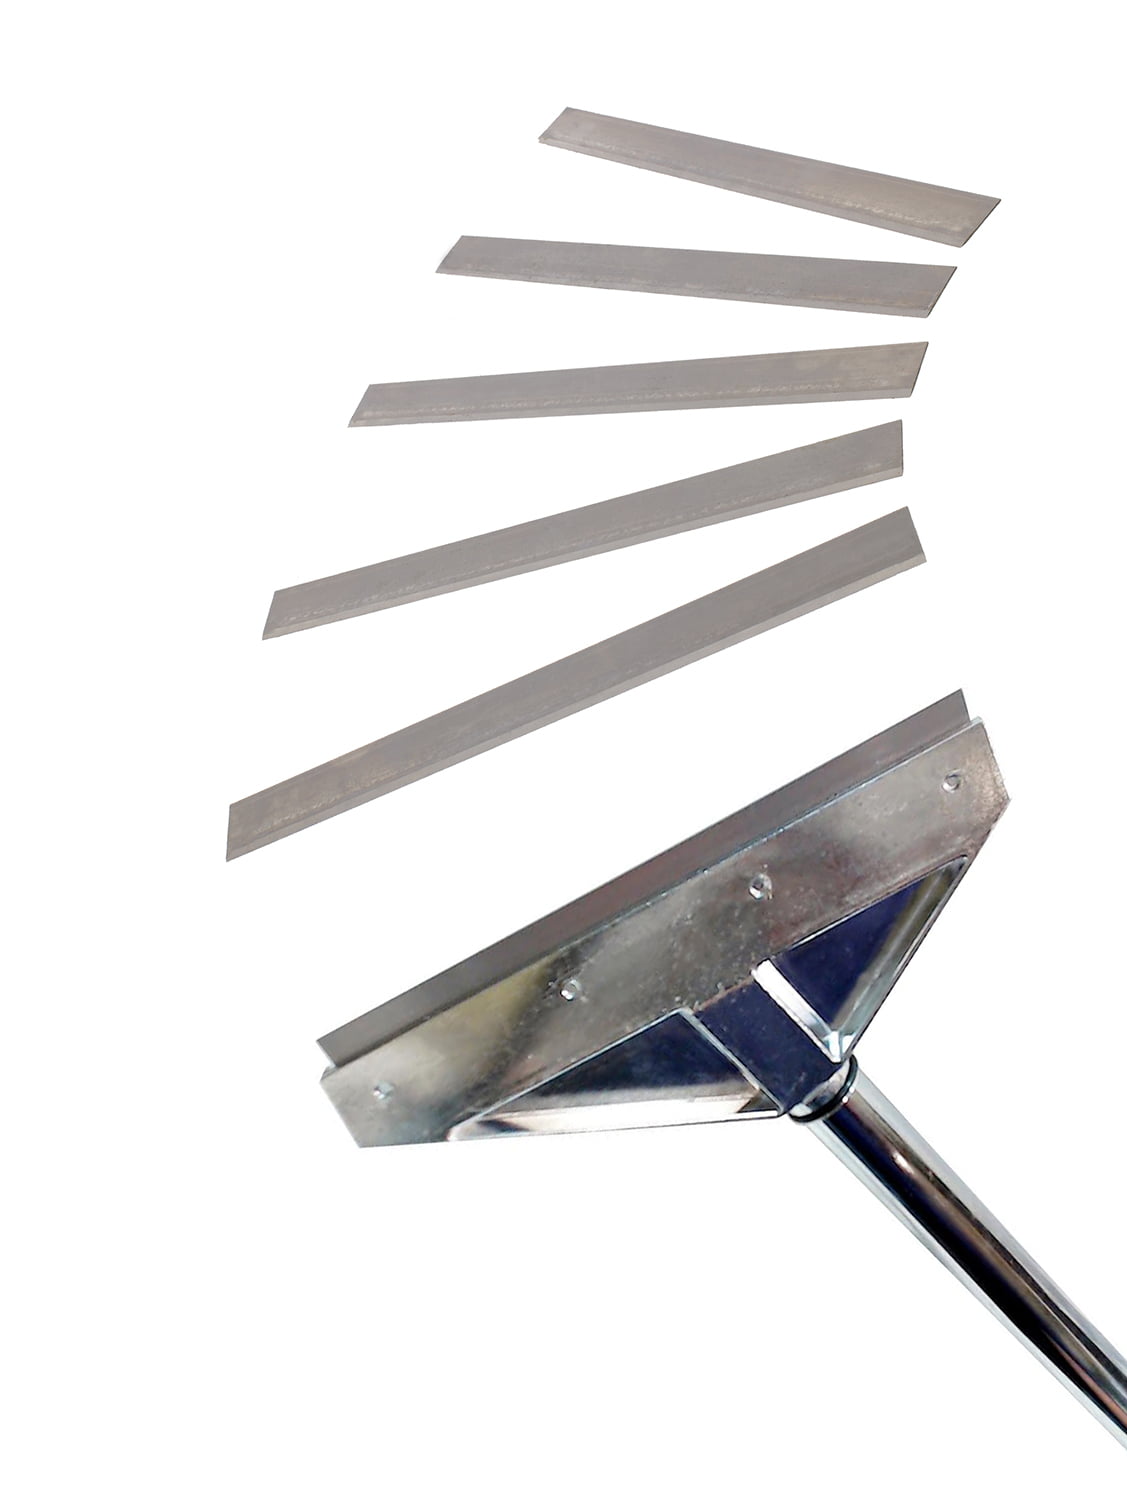 Silverline Single Edge Razor Blade Scraper Window Clean Paint Tool with 5 Blades 